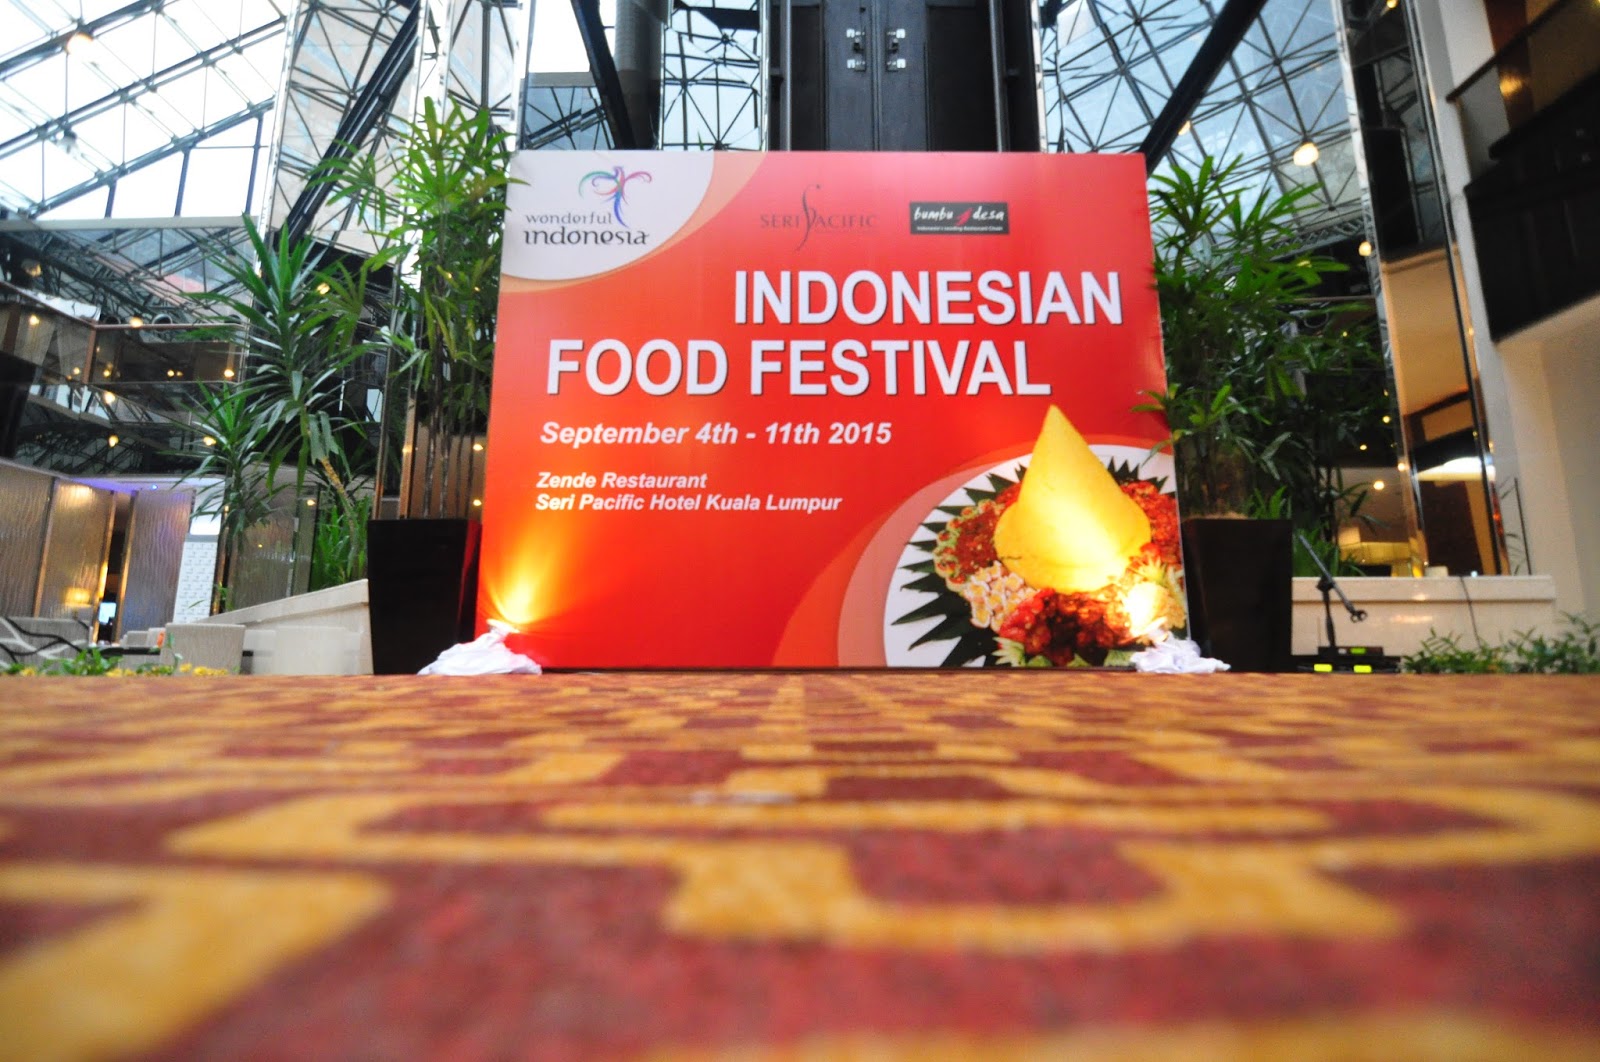 RAZZWEY: Indonesia Food Festival  Seri Pacific Hotel, Kuala Lumpur